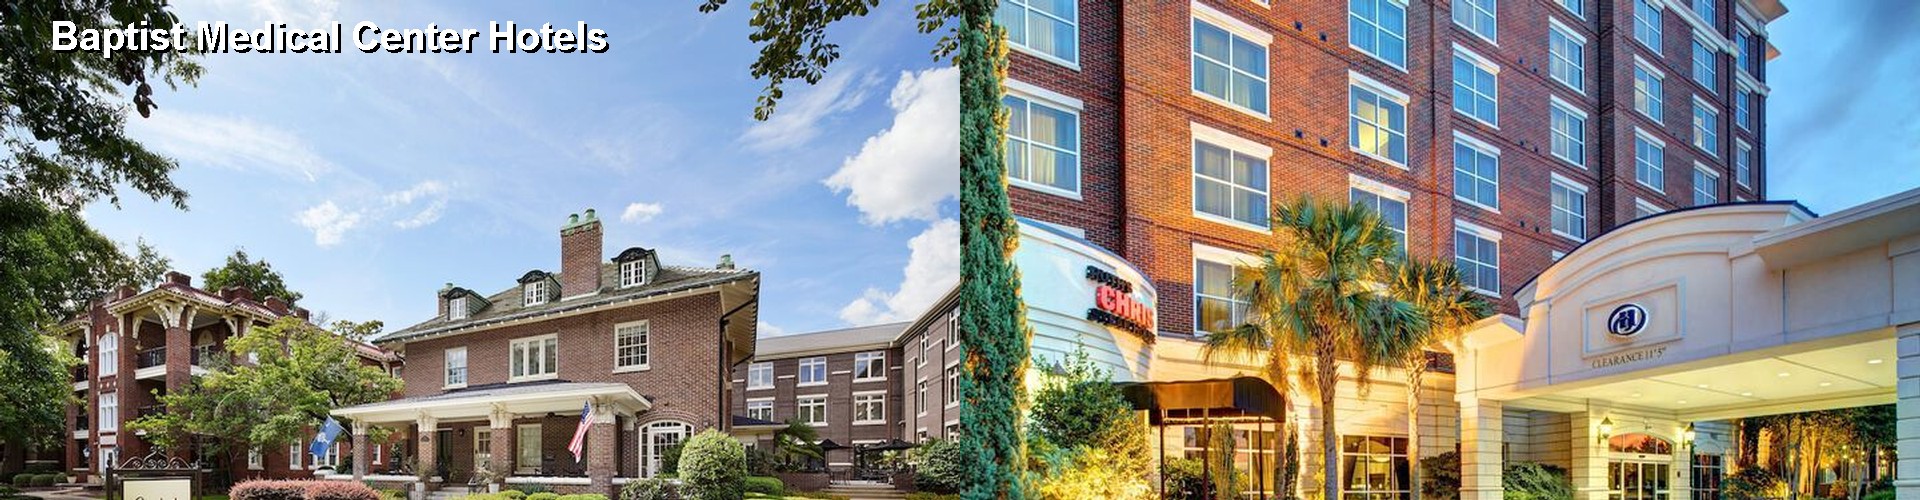 4 Best Hotels near Baptist Medical Center